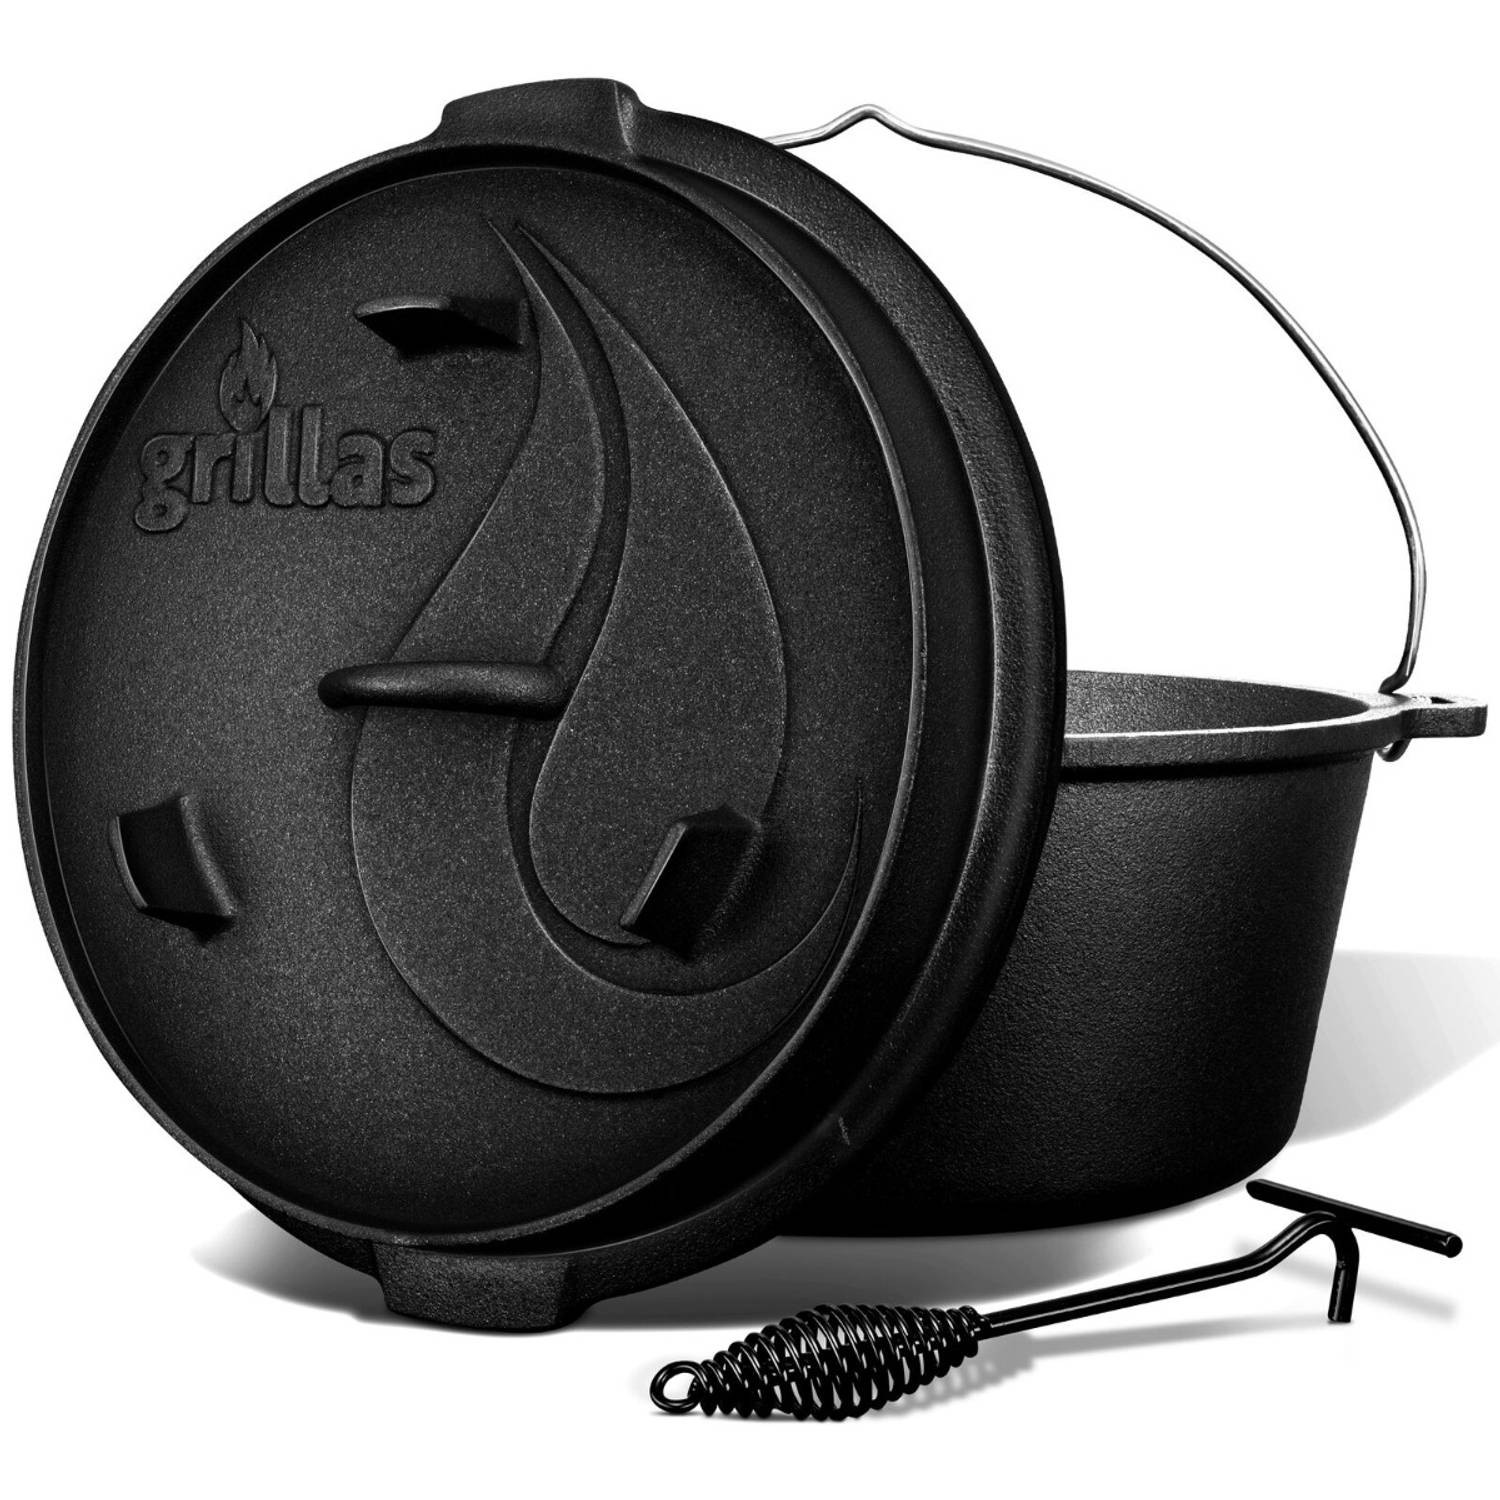 Grillas- Dutch Oven, 13.6L, BBQ pan, gietijzer K